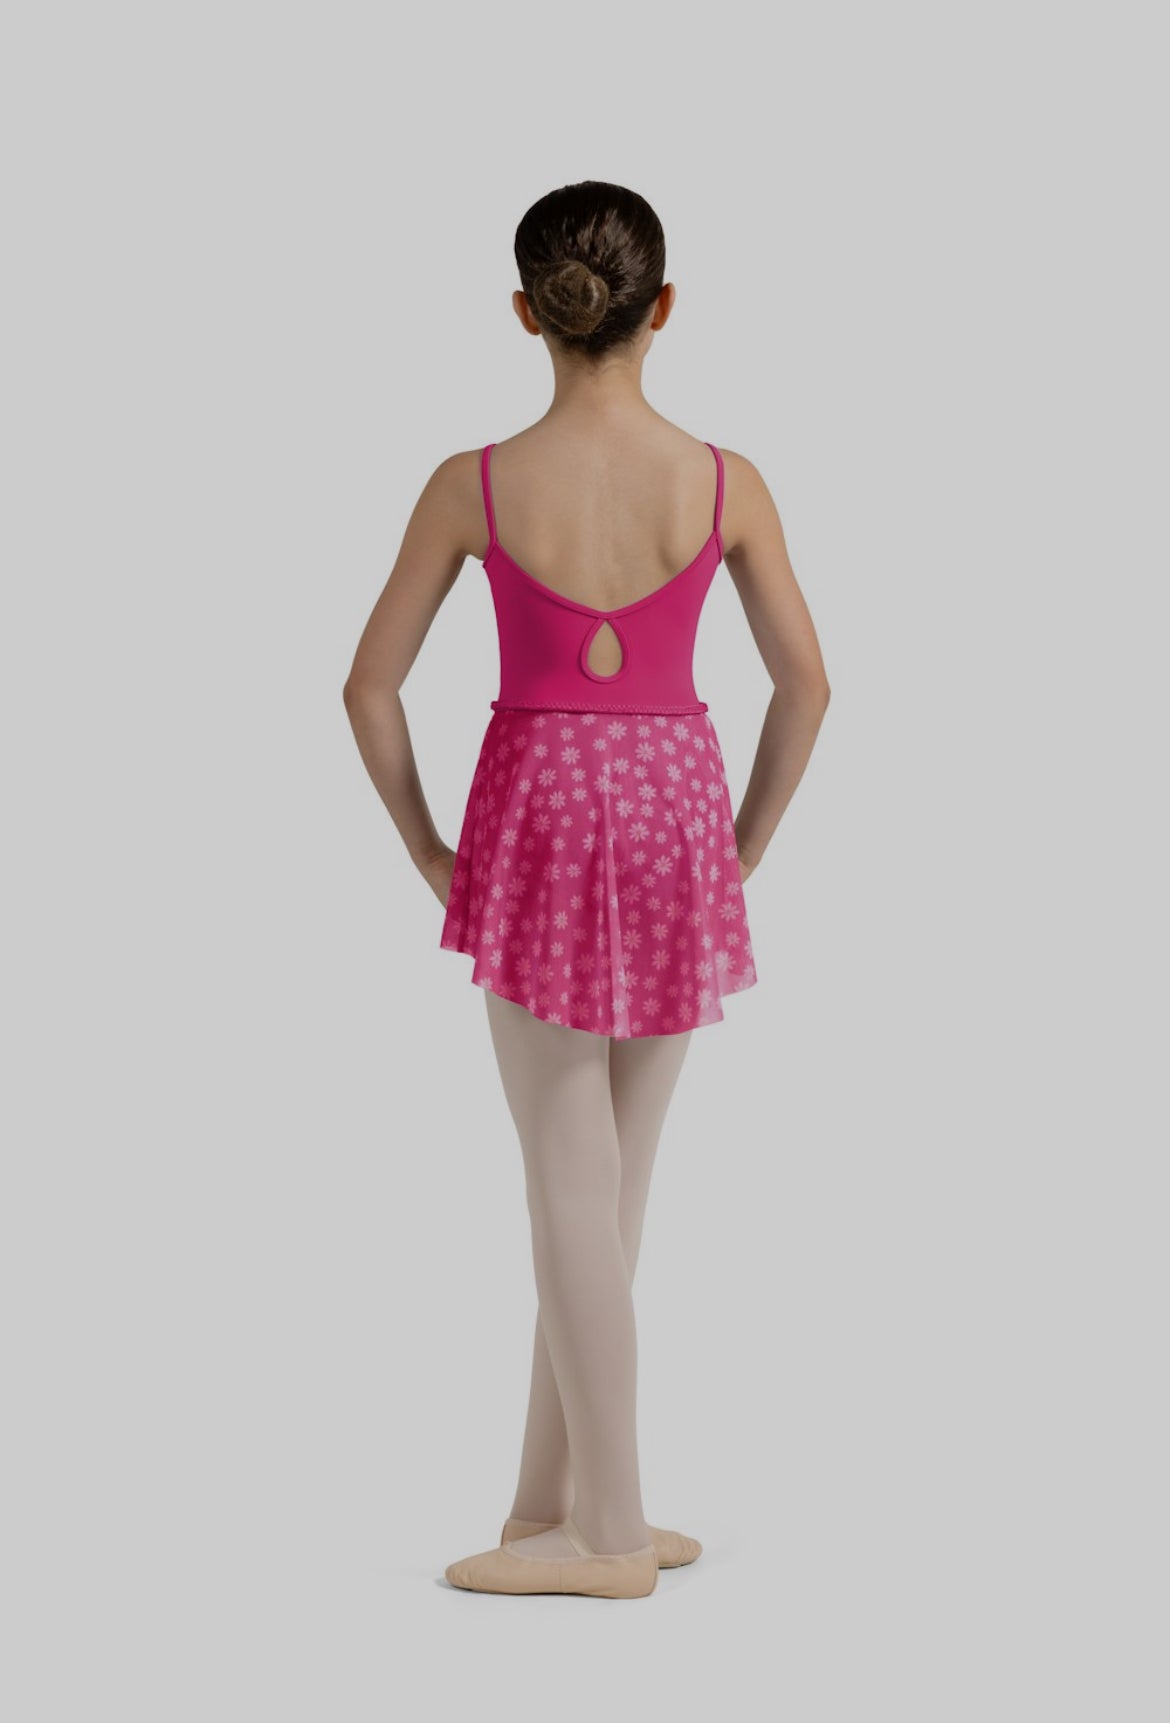 Mirella Miami Girl’s Hot Pink Daisy Mesh Print Skirt with Braid